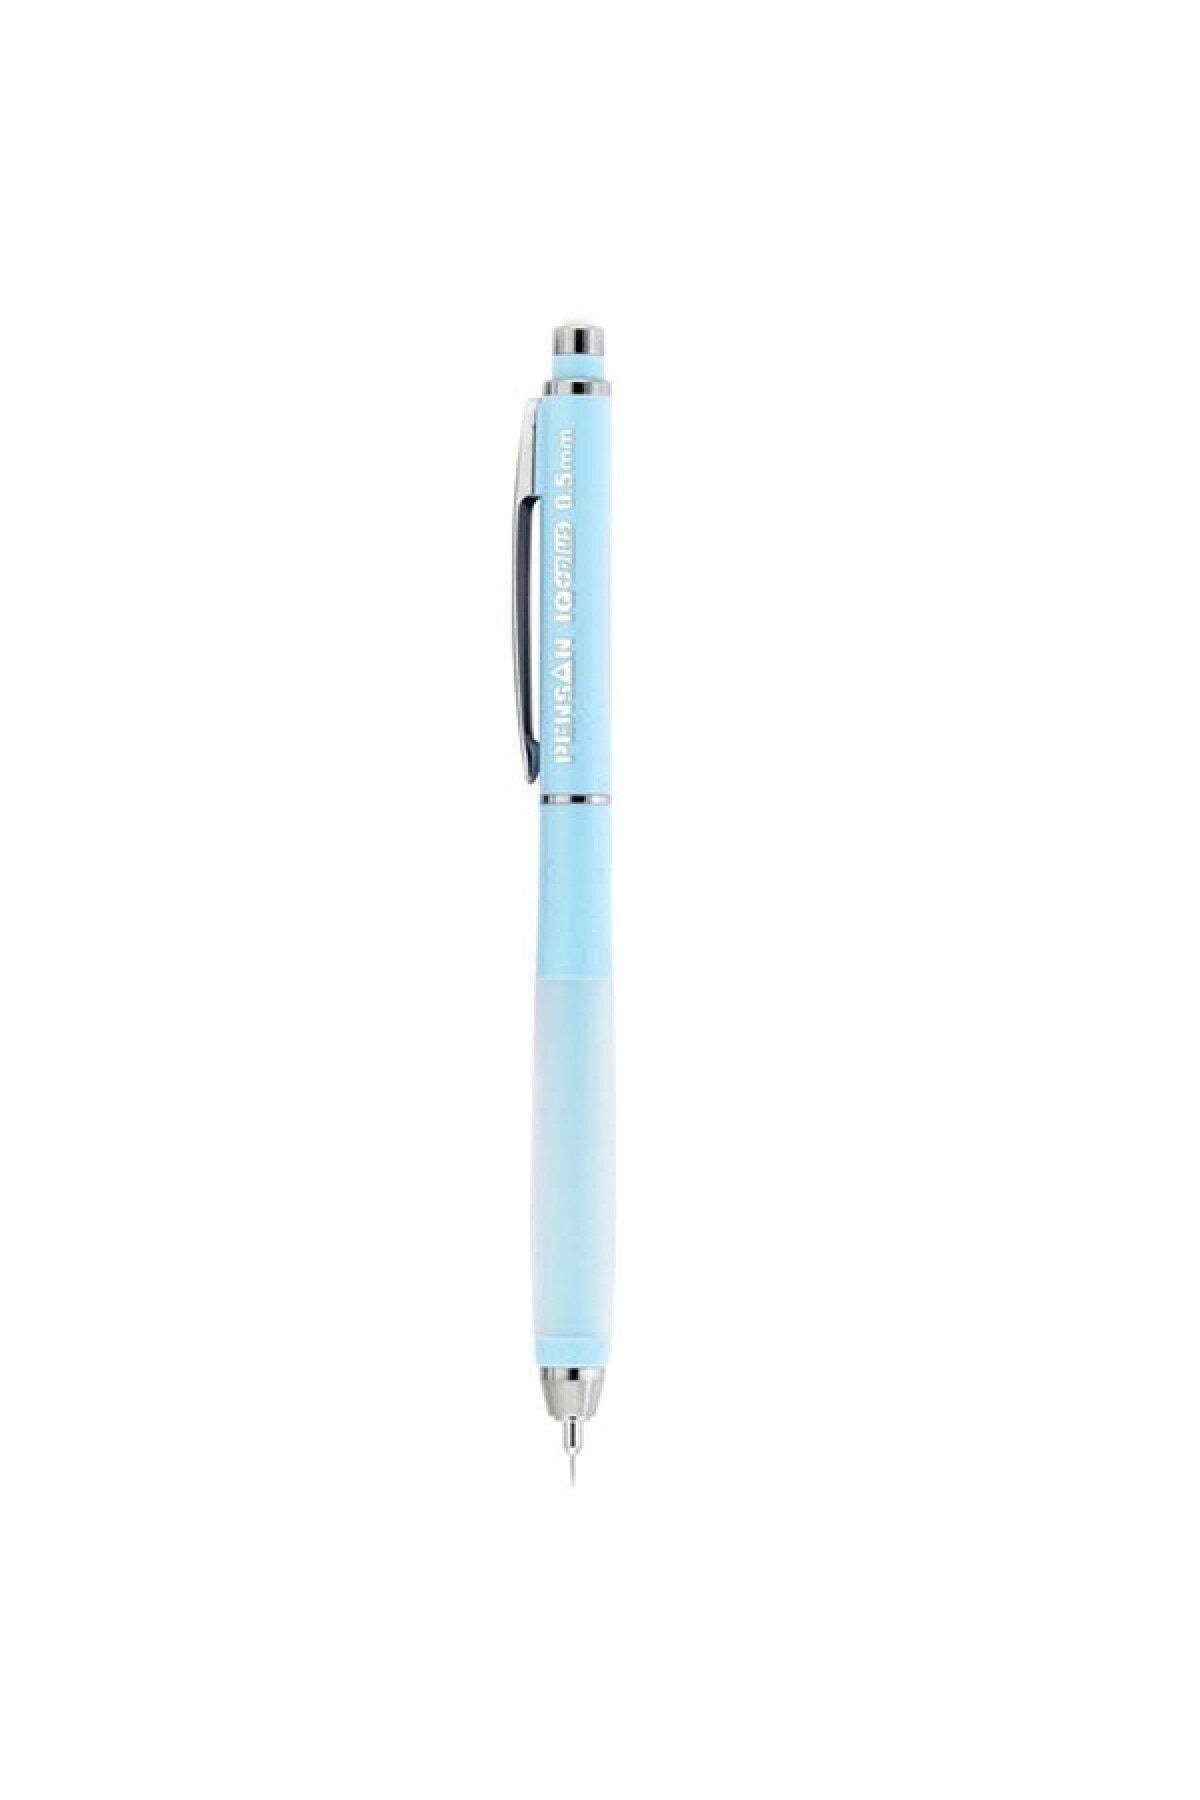 Pensan Iq Plus Versatil Kalem - 0.5 Mm Pastel Mavi Uçlu Kalem